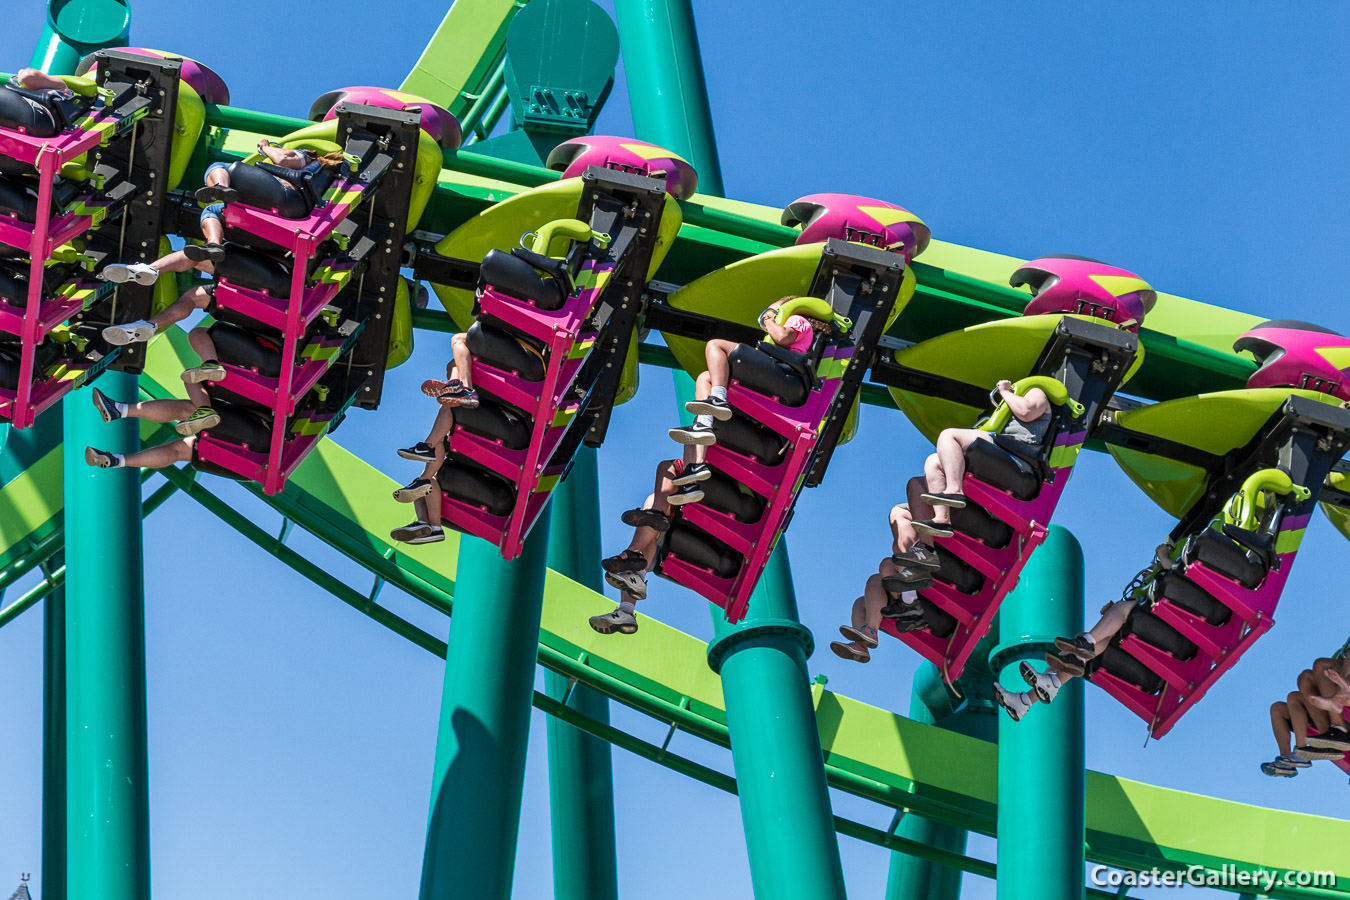 Kick the Sky - Raptor roller coaster at Cedar Point